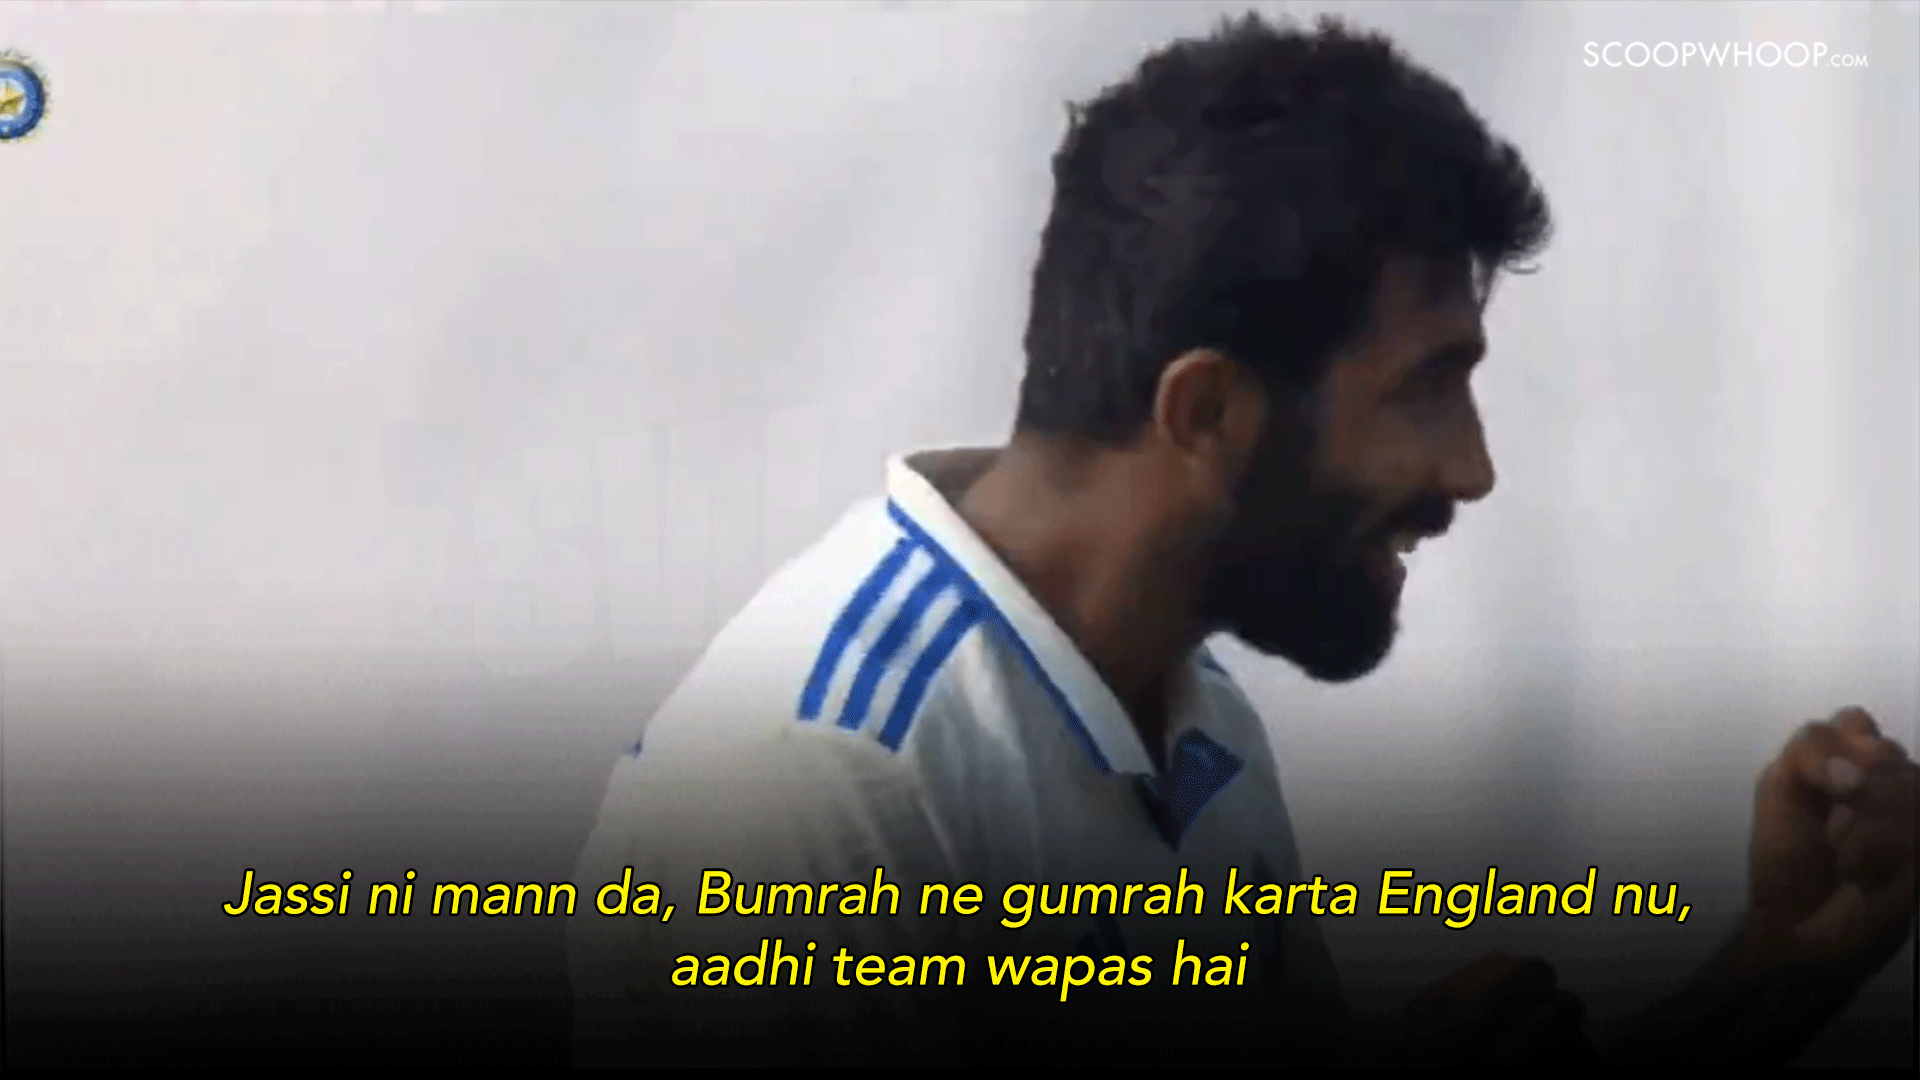 India v/s England test